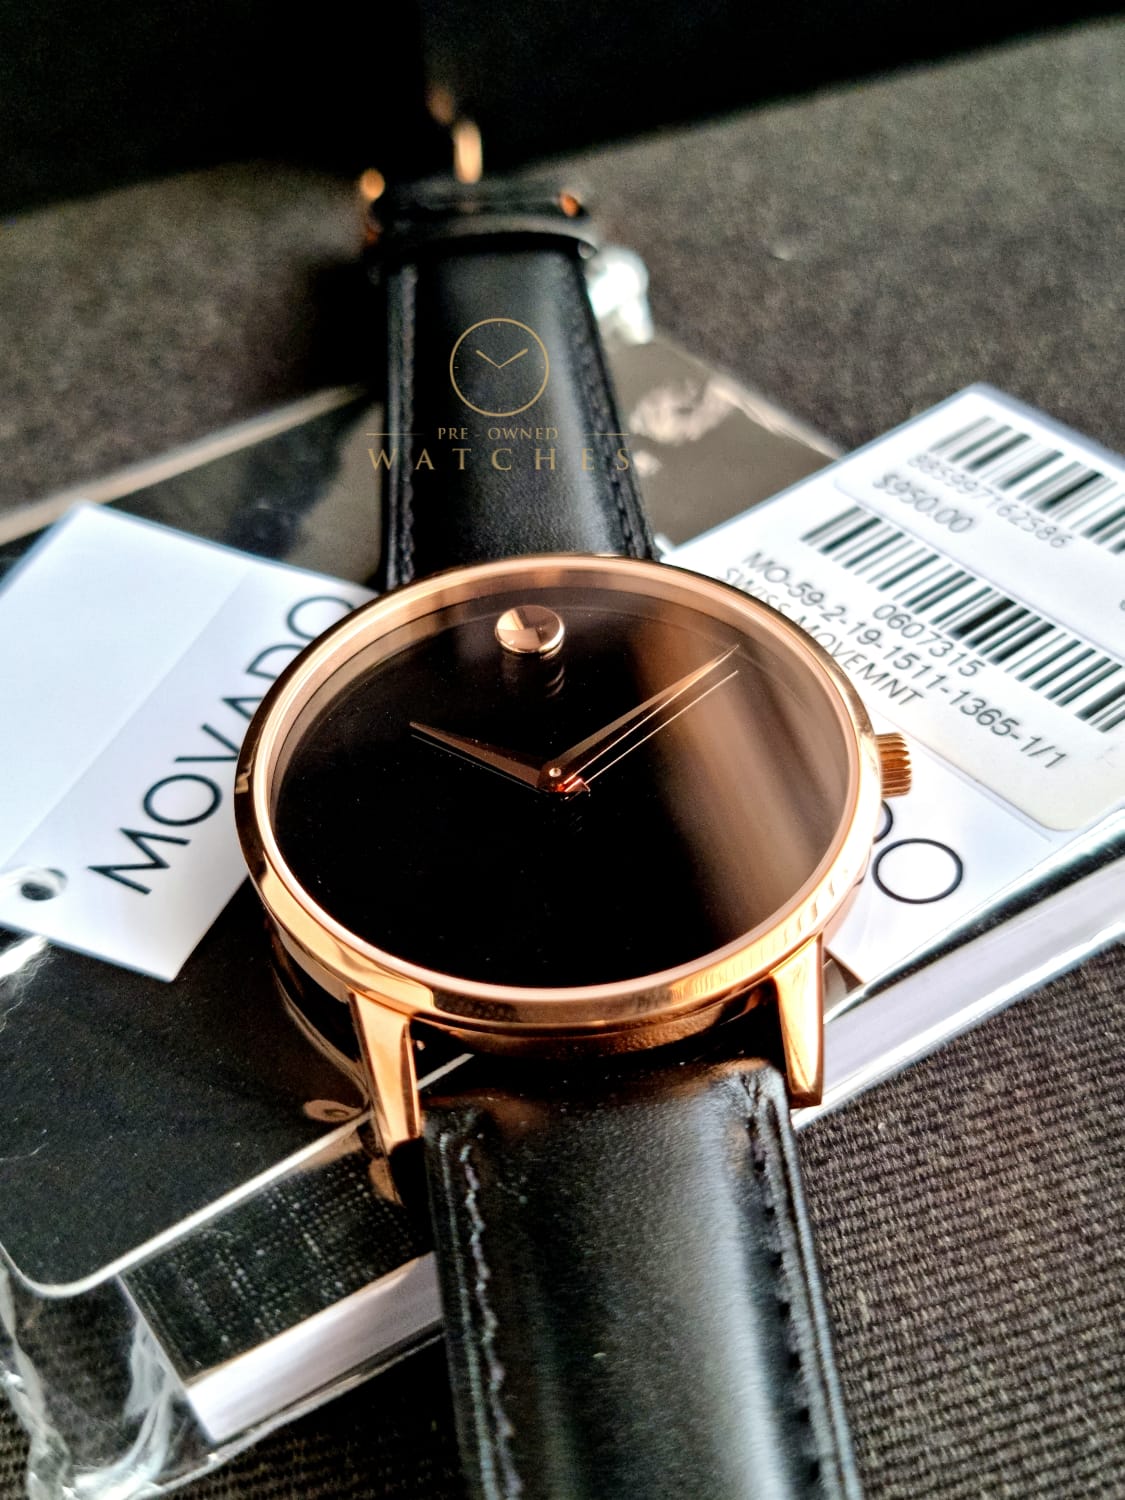 Movado 0607315 Men's Museum Classic Rose Gold Case Quartz Watch